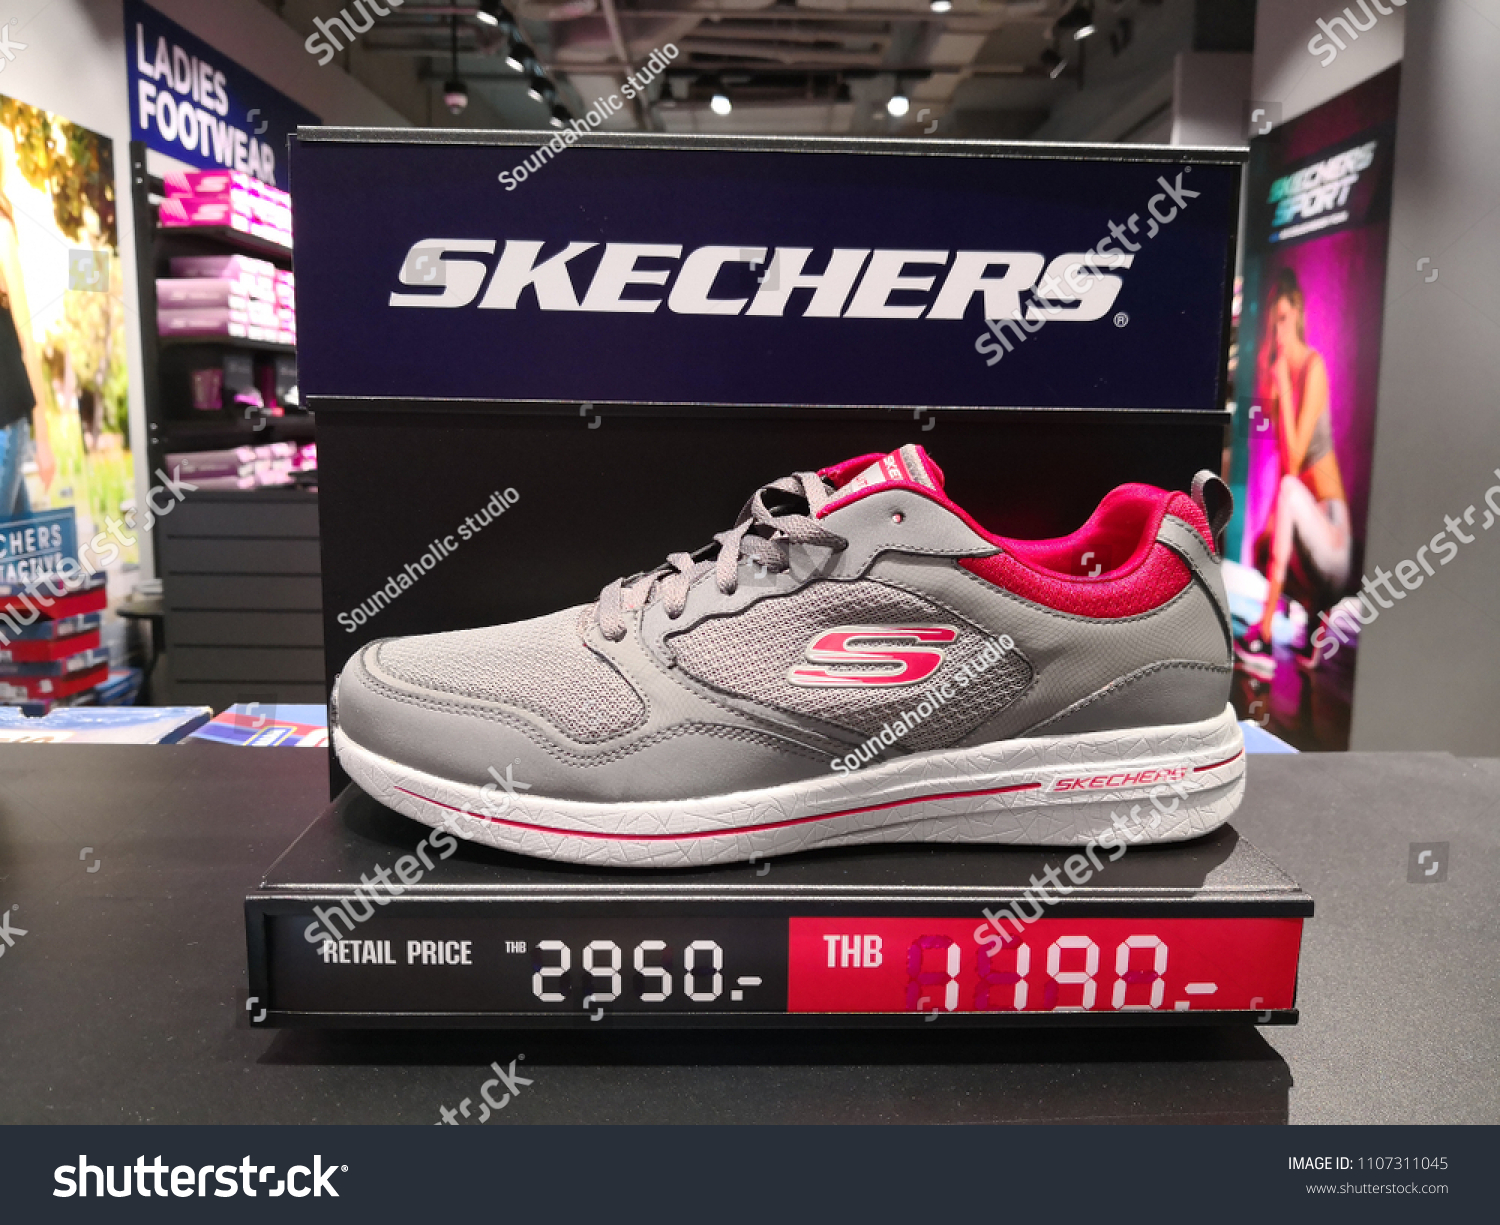 sketcher shoes thailand